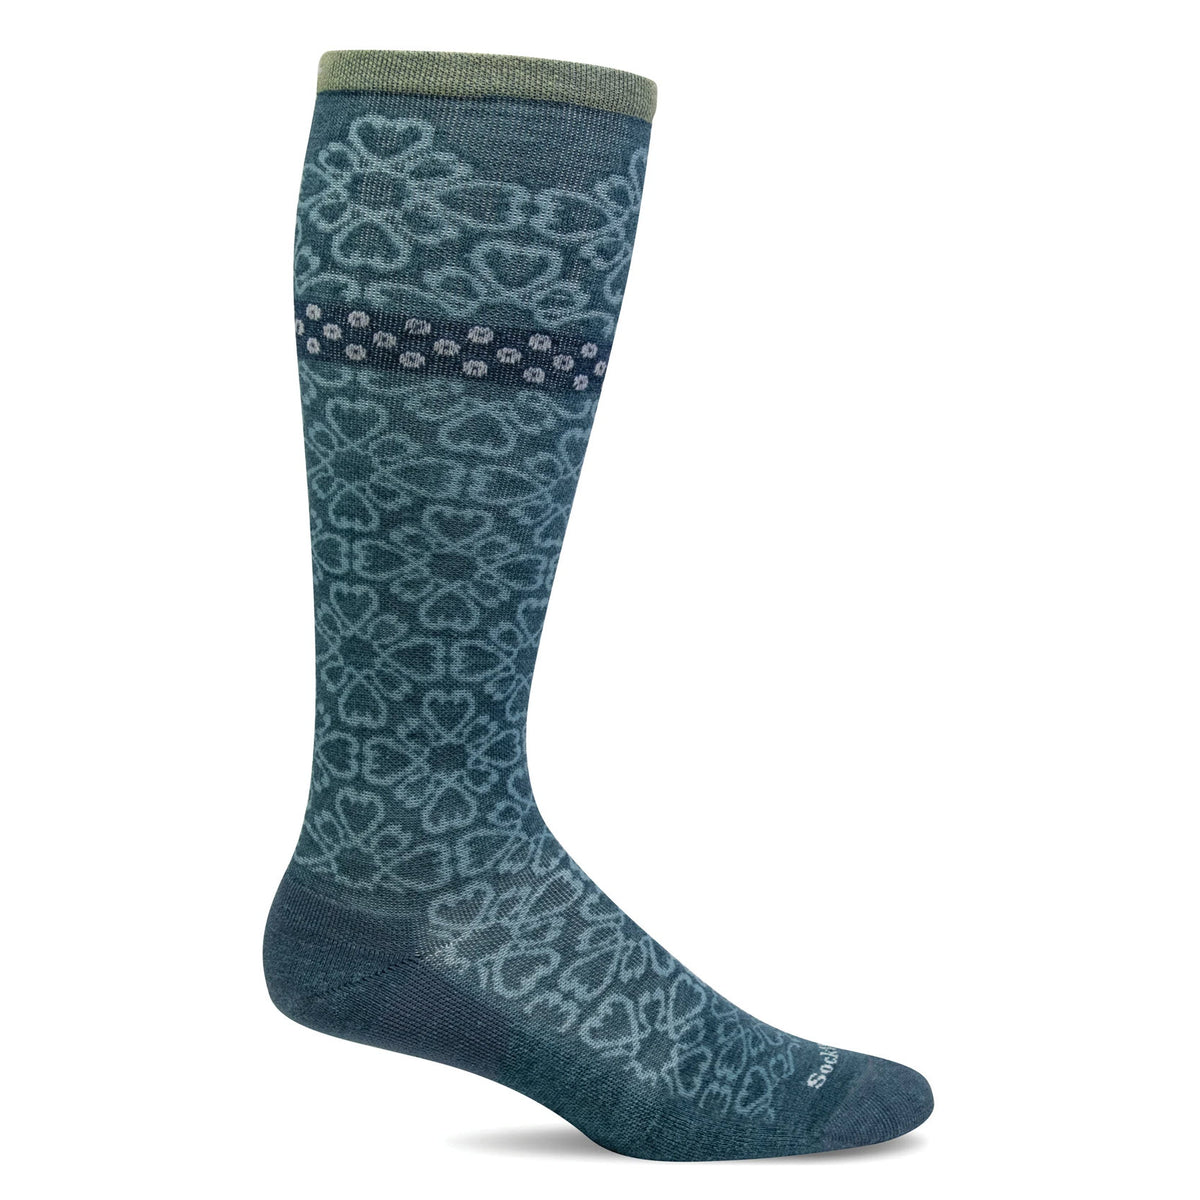 Sockwell Botanical Blue Ridge 15-20mmHg compression socks - women&#39;s against a white background.